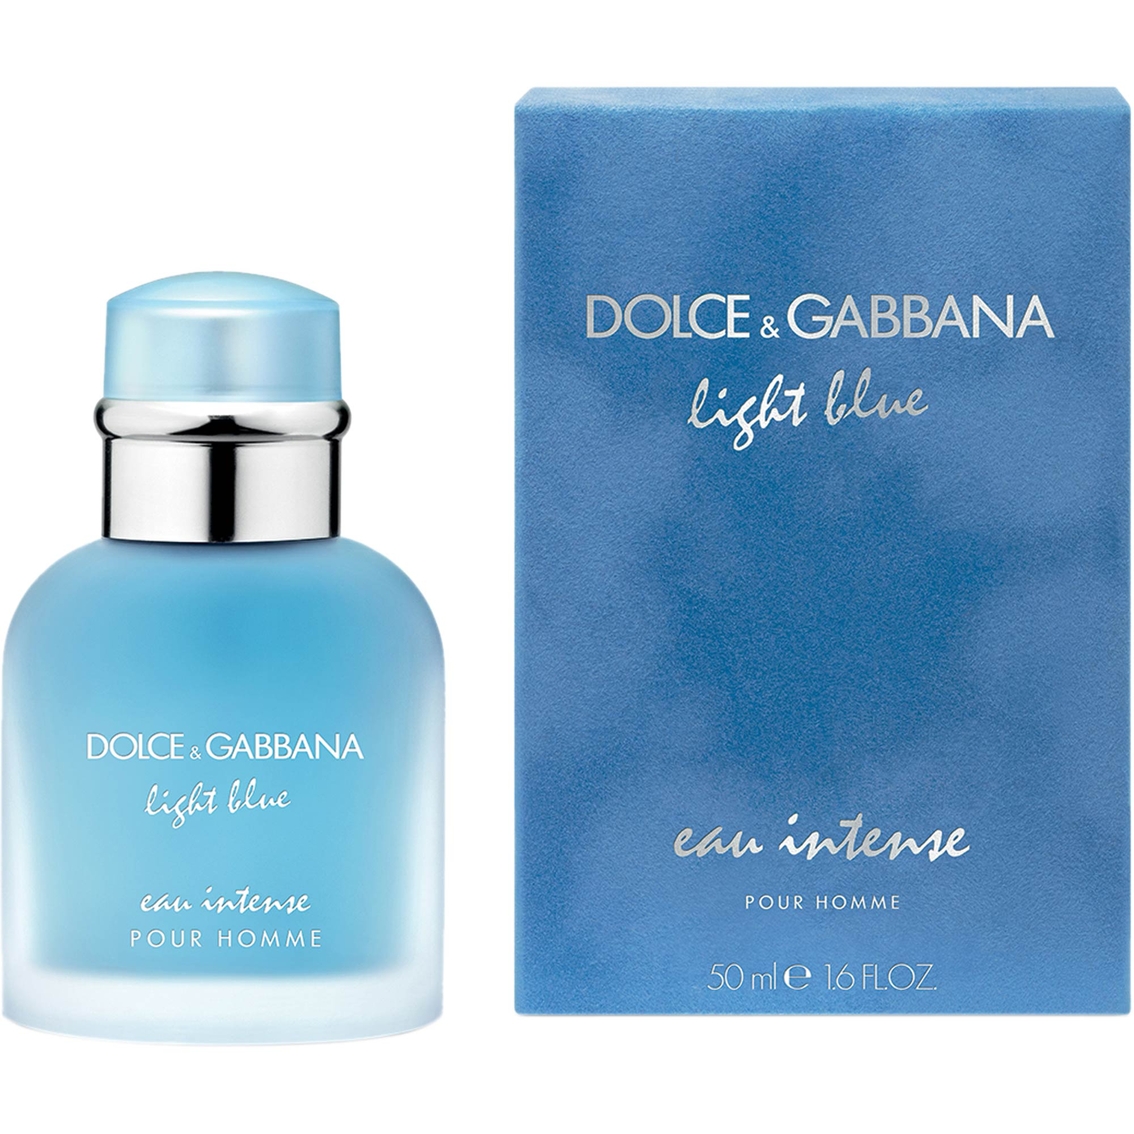 Купить Парфюмерная вода Dolce & Gabbana, Dolce & Gabbana Light Blue Eau Intense Pour Homme 50.0ml, Италия